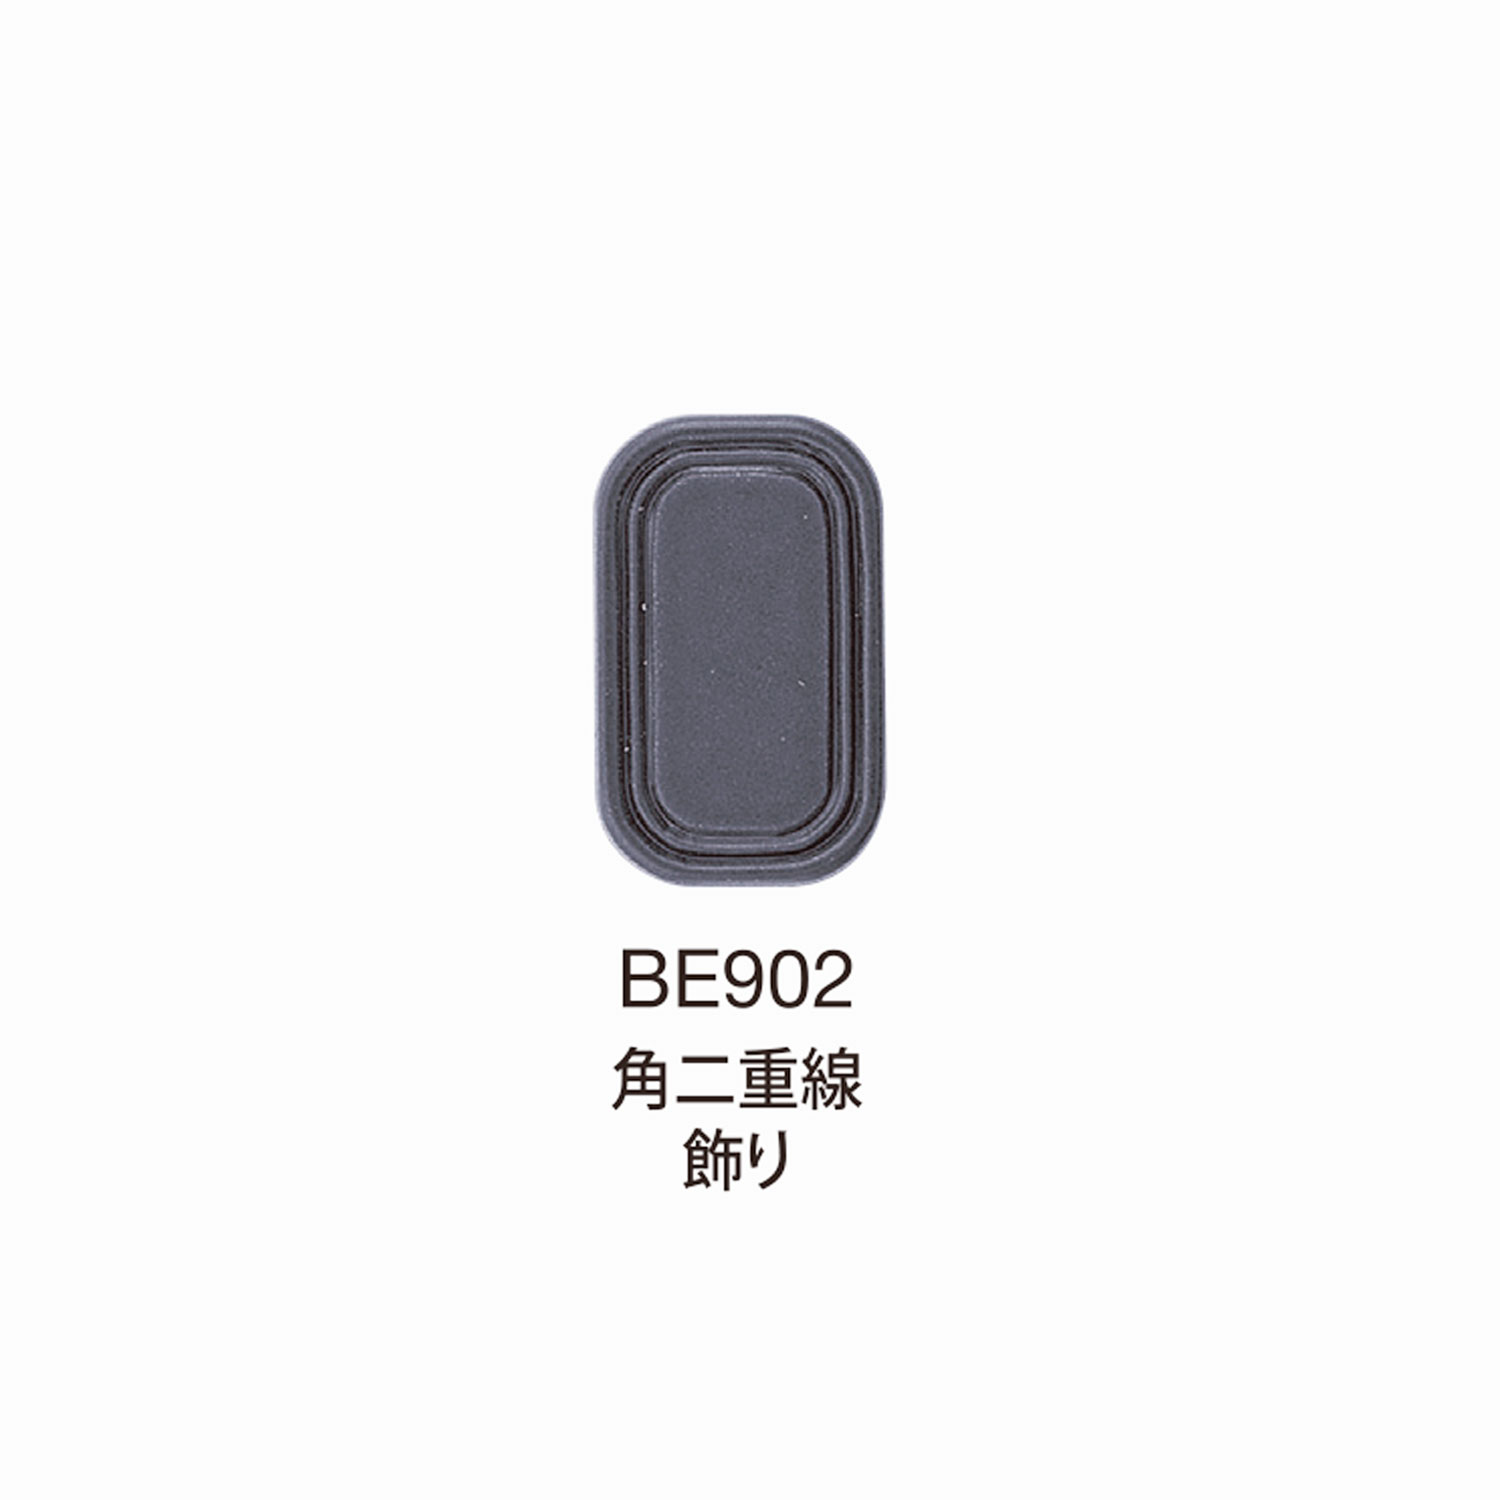 BE902 BEREX α Top Hardware Corner Double Line Dekoration[Schnallen Und Ring] Morito